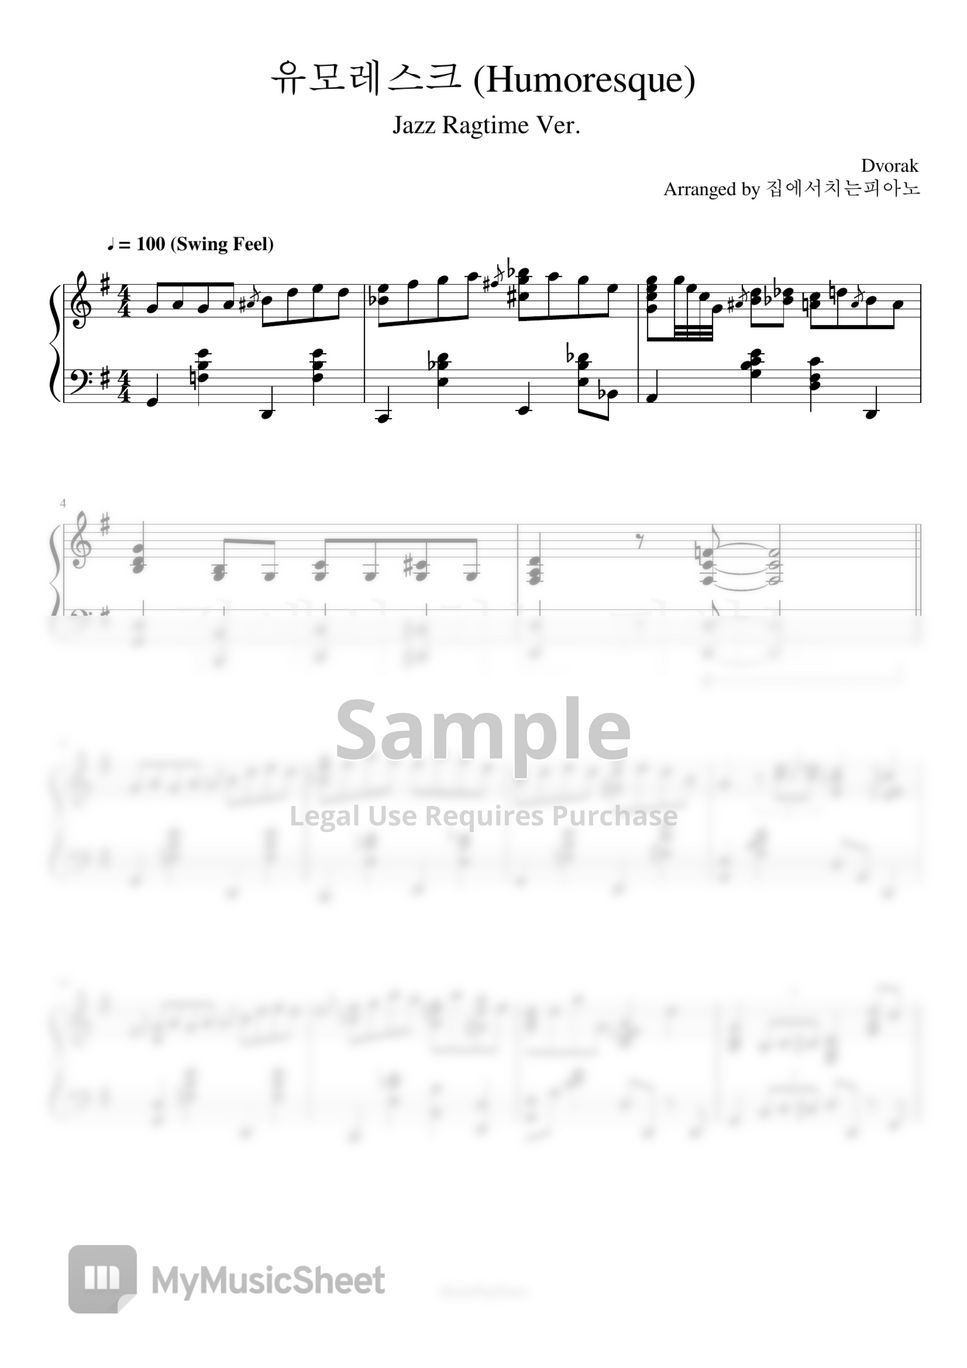 Dvorak - Humoresque(유모레스크) (Jazz Ragtime ver) by 집에서치는피아노